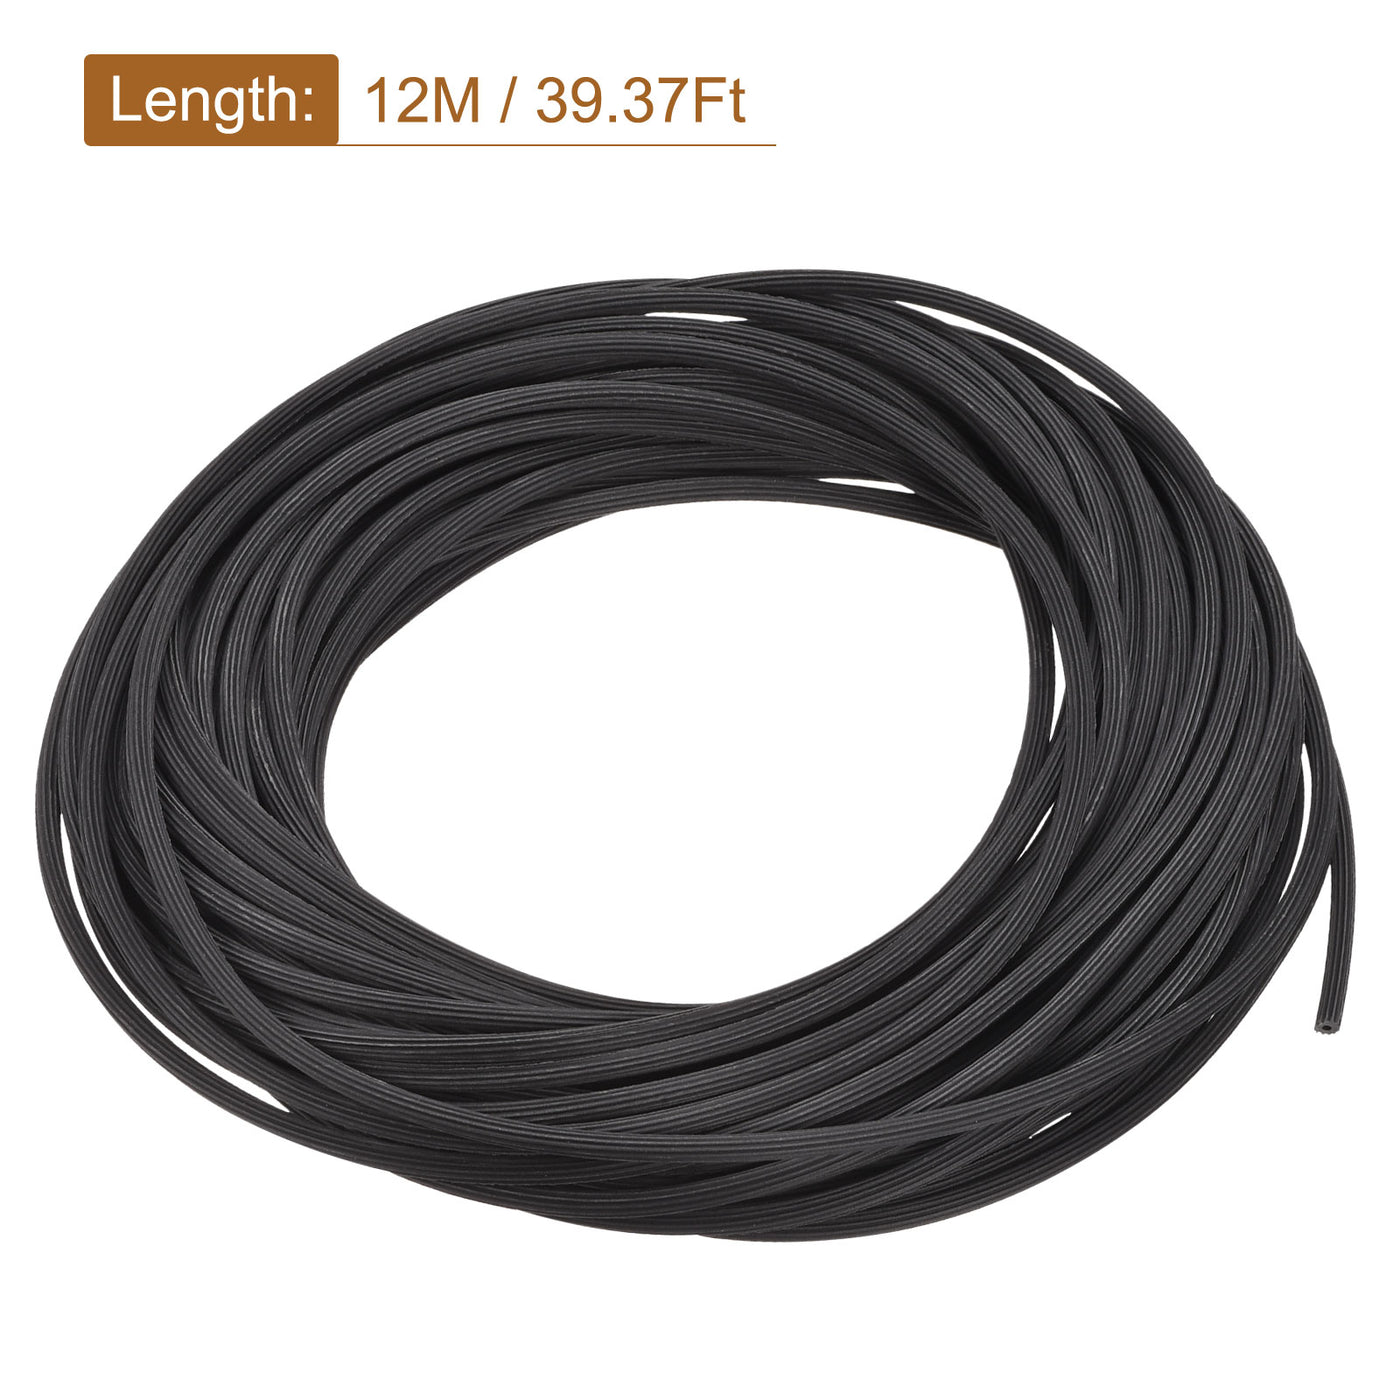 uxcell Uxcell Screen Spline 12M/39.37Ft Length PVC Sealing Strip Retainer, 3mm OD Black